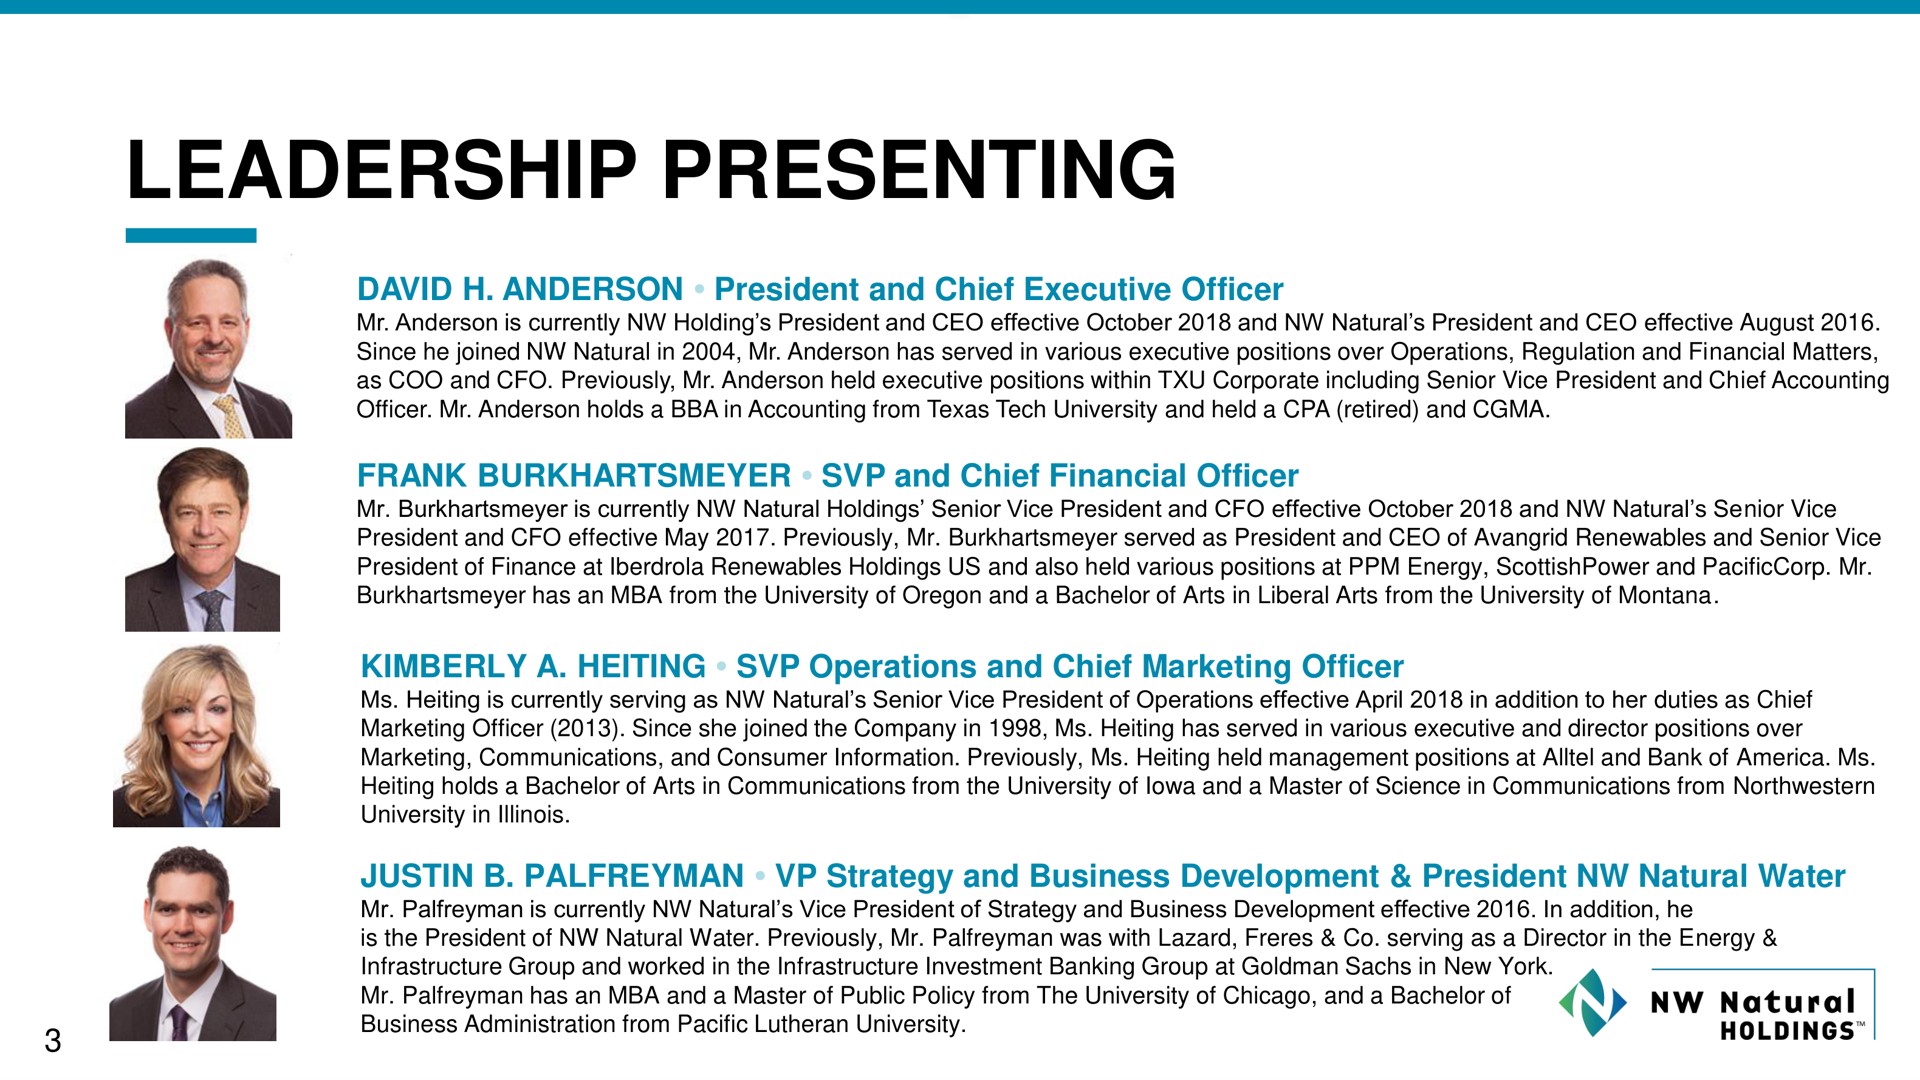 leadership presenting | NW Natural Holdings